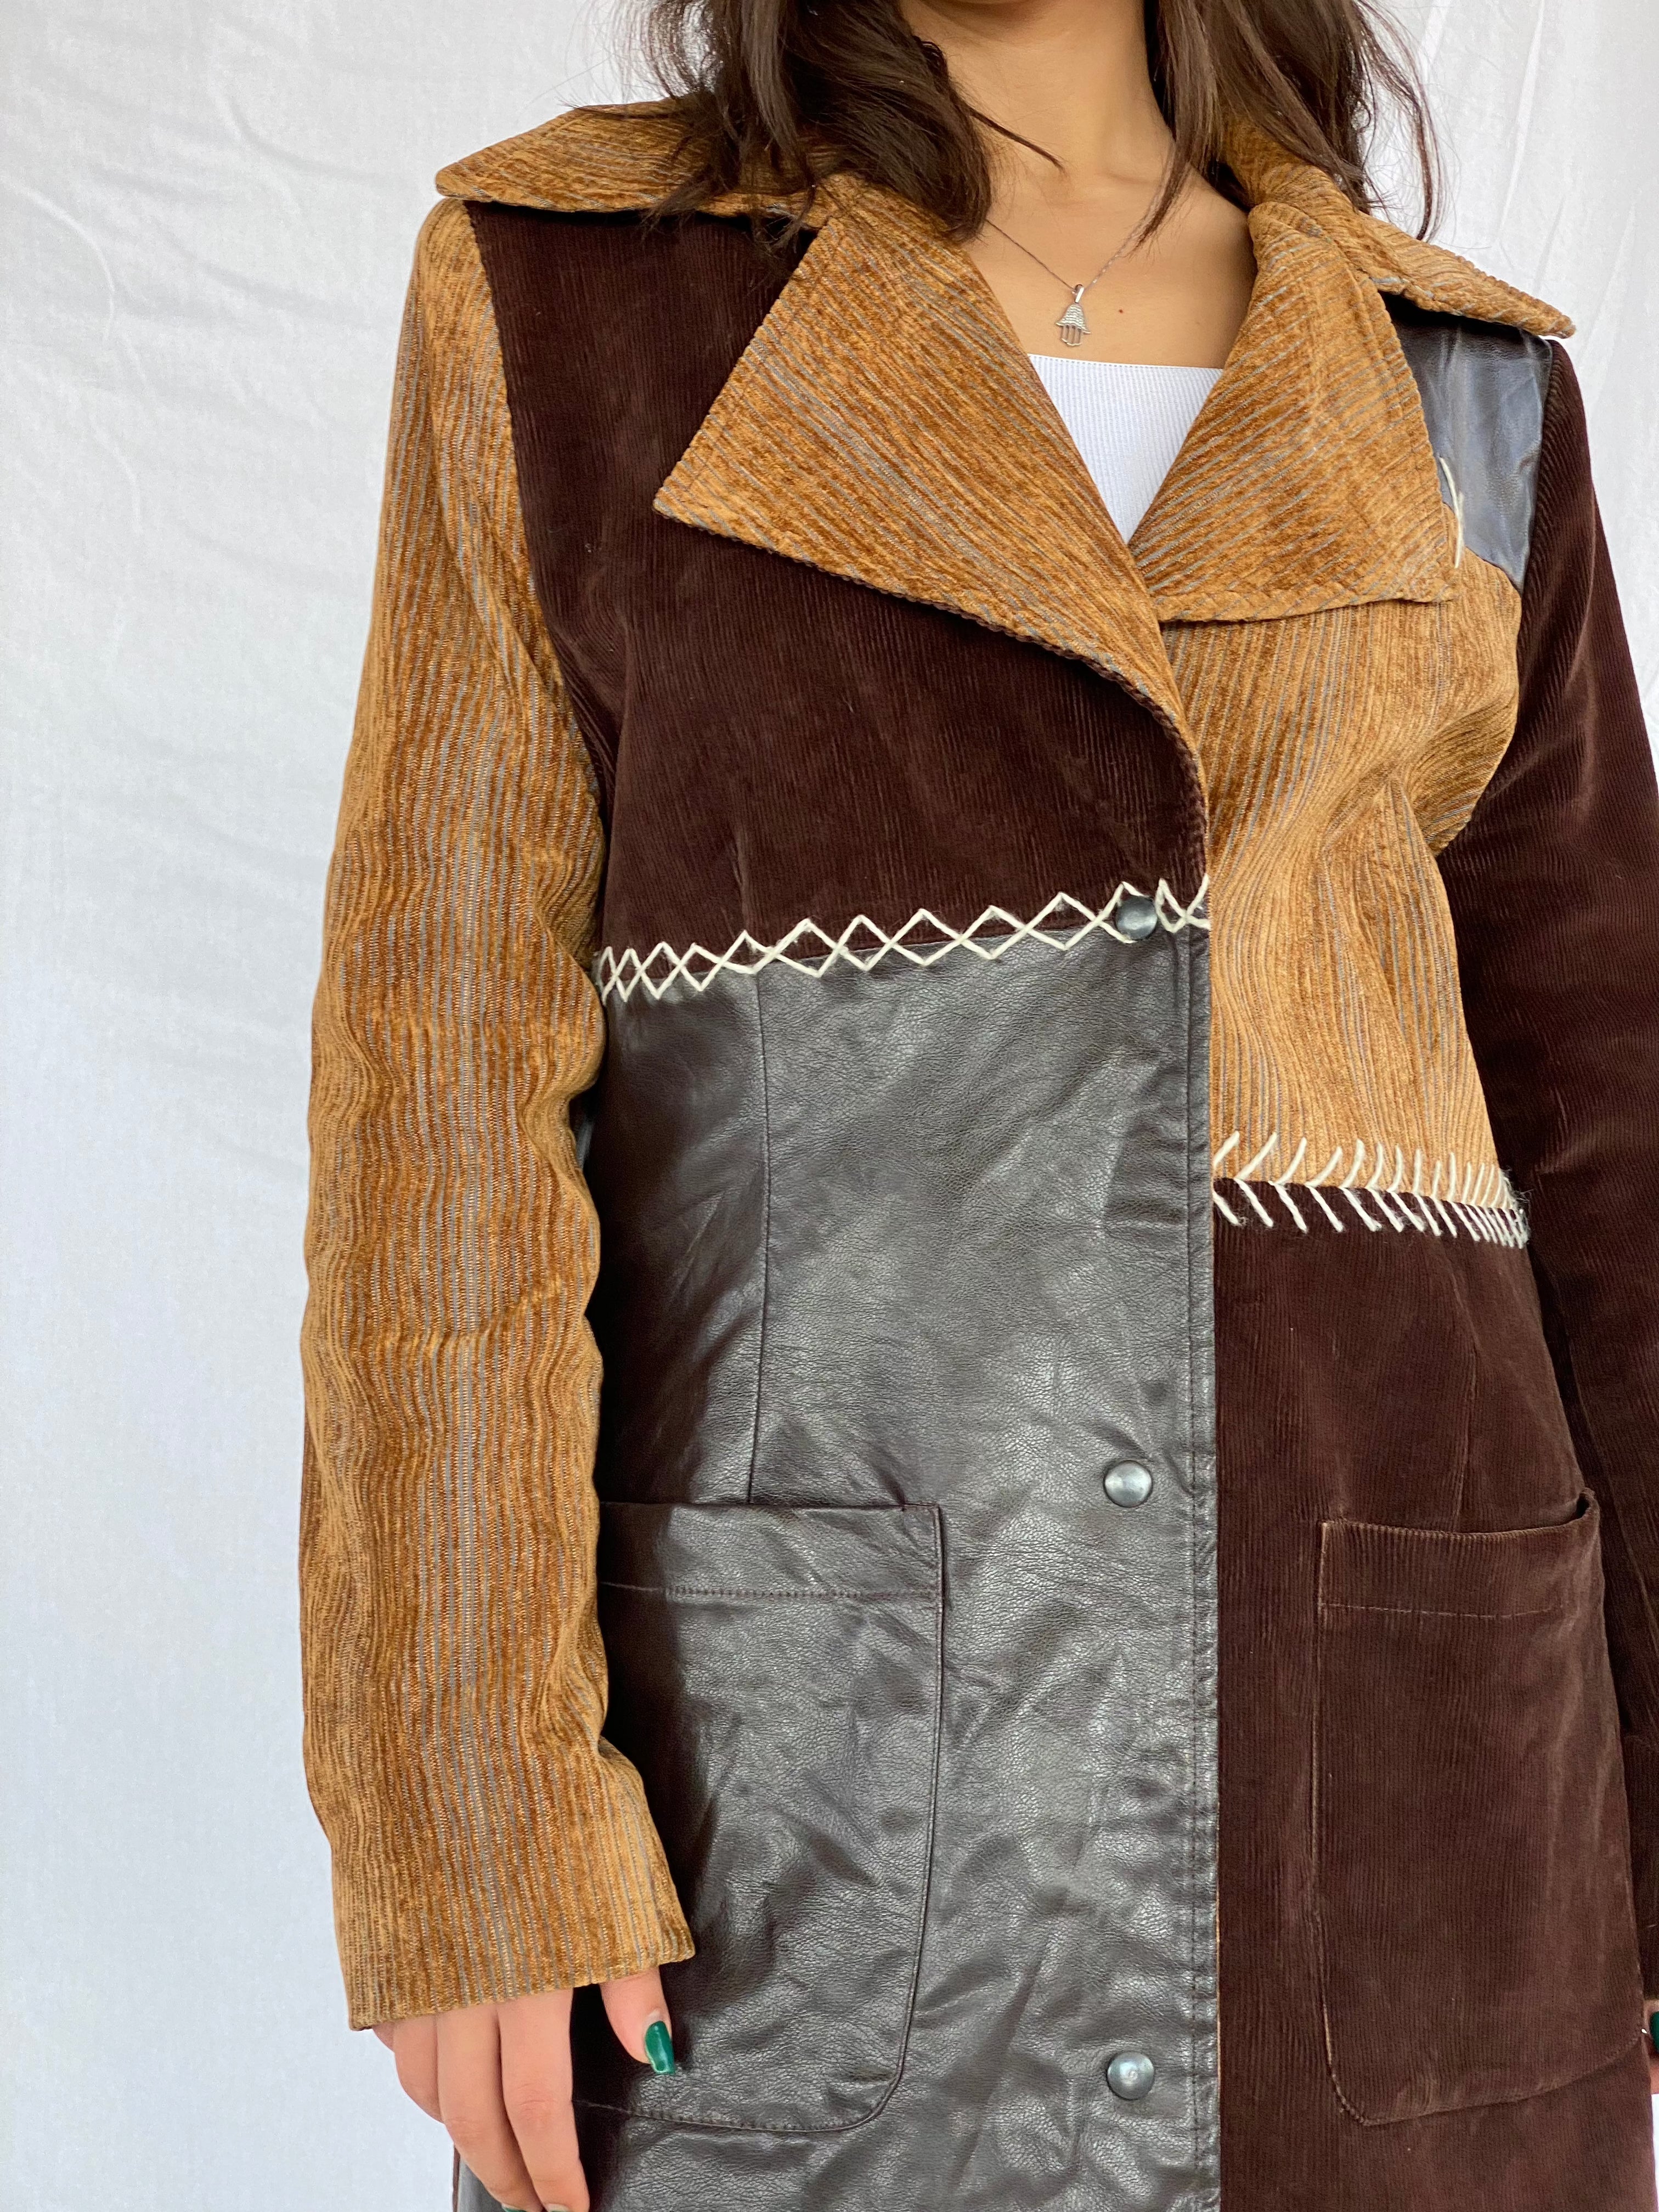 Vintage BUGARRI Collection Coat - Balagan Vintage Coat brown leather, coat, leather coat, patchwork, patchwork jacket